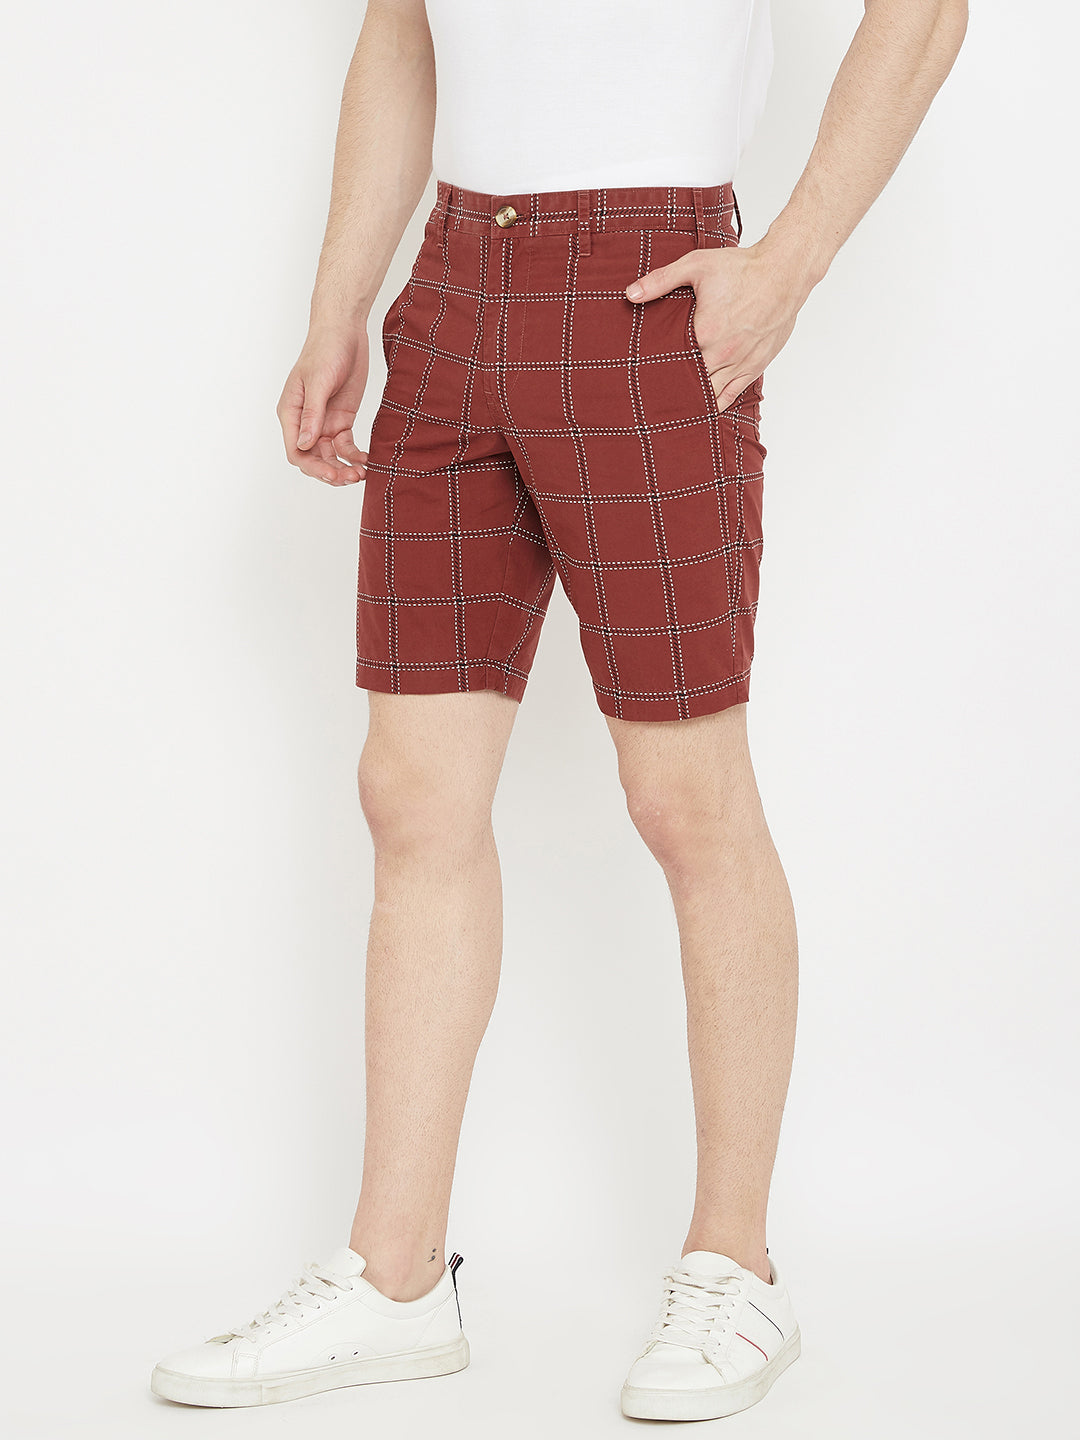 Maroon Checked shorts - Men Shorts